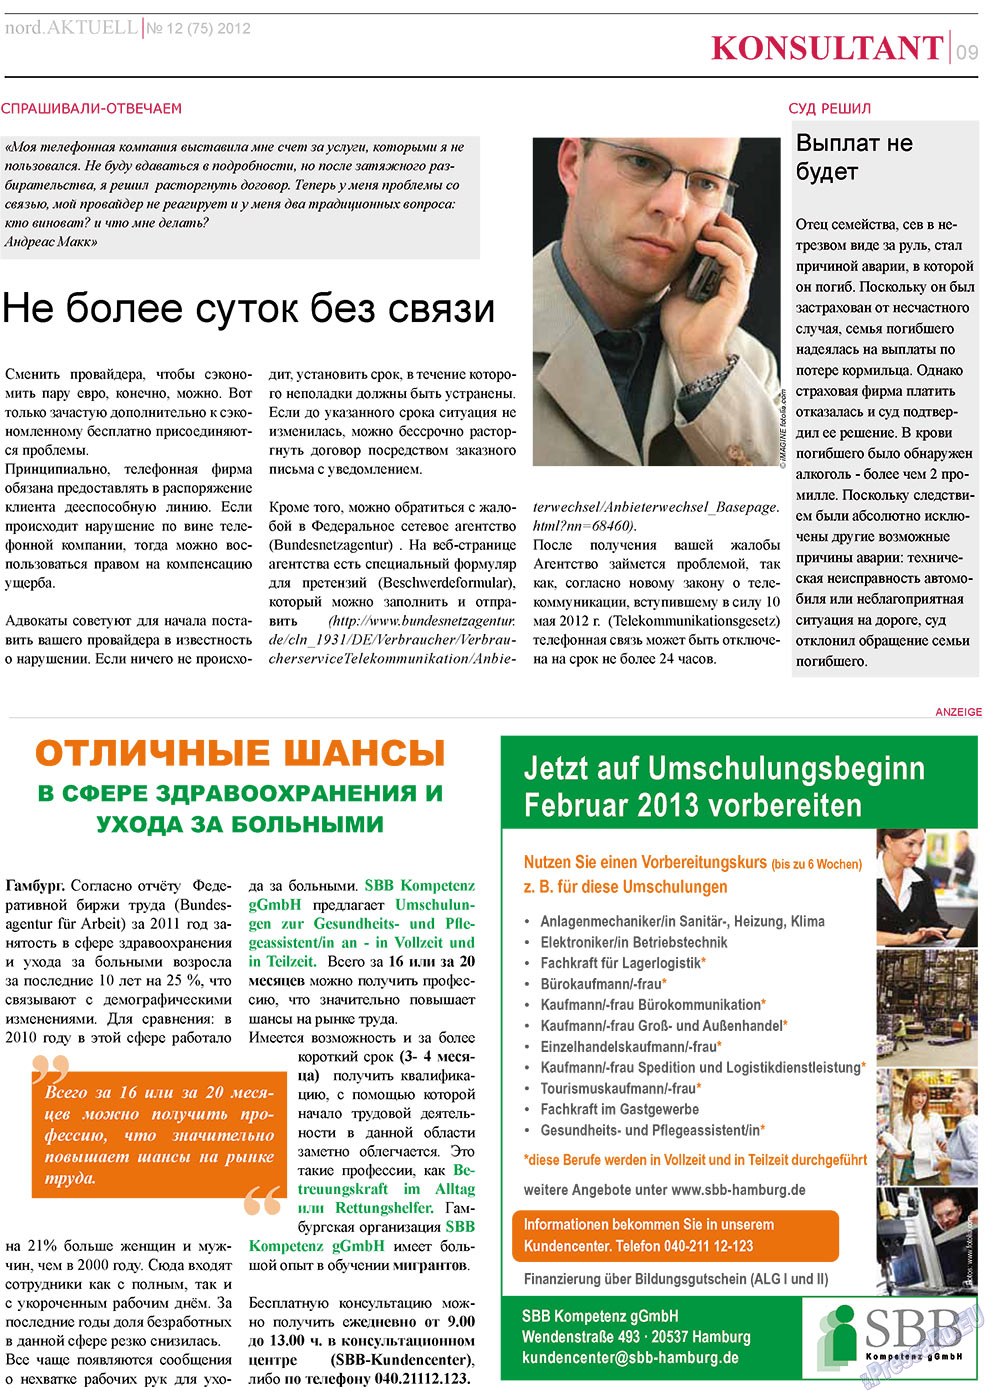 nord.Aktuell, газета. 2012 №12 стр.9